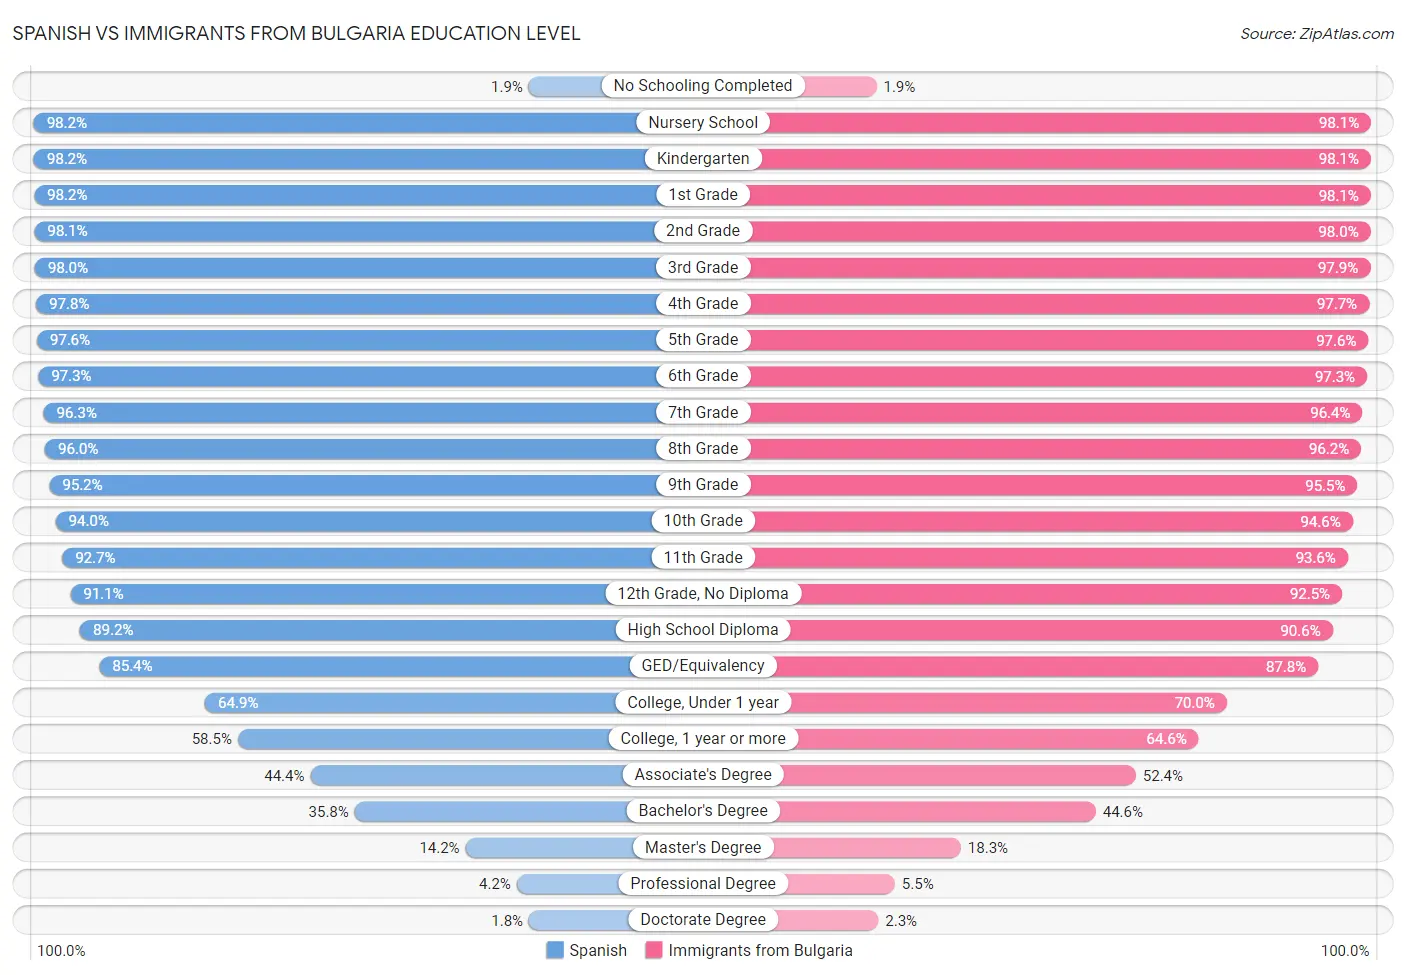 Spanish vs Immigrants from Bulgaria Education Level